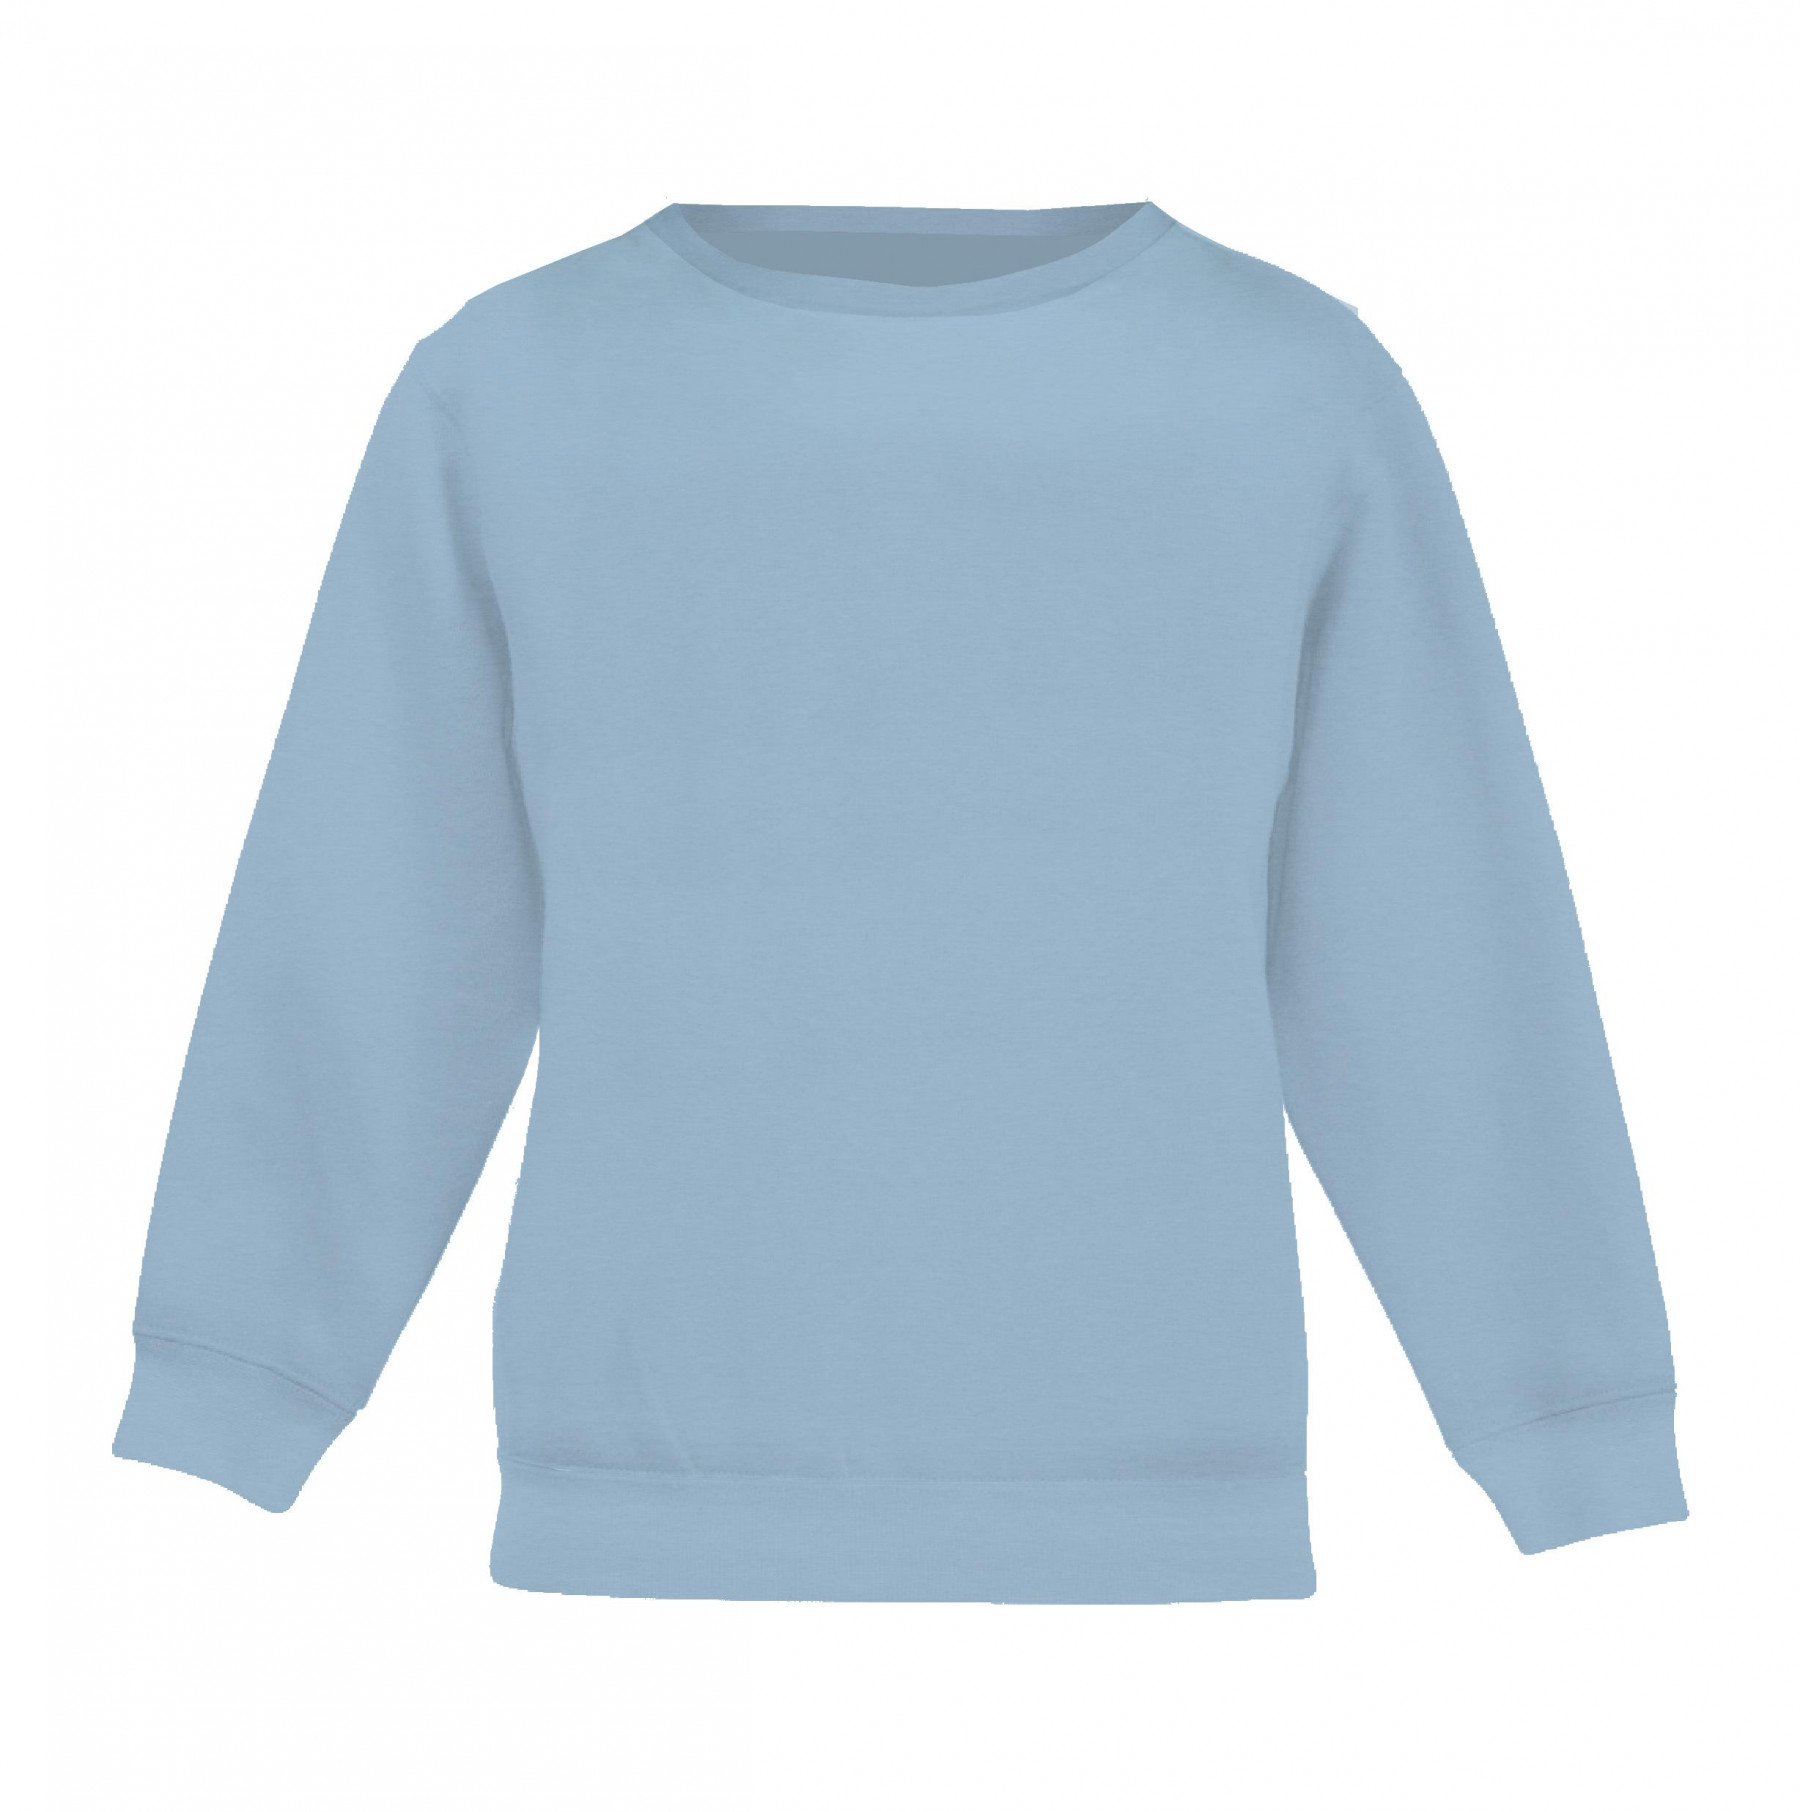 CHILDREN'S (NOE) SWEATSHIRT - B-06 SERENITY / blue - looped knit fabric 